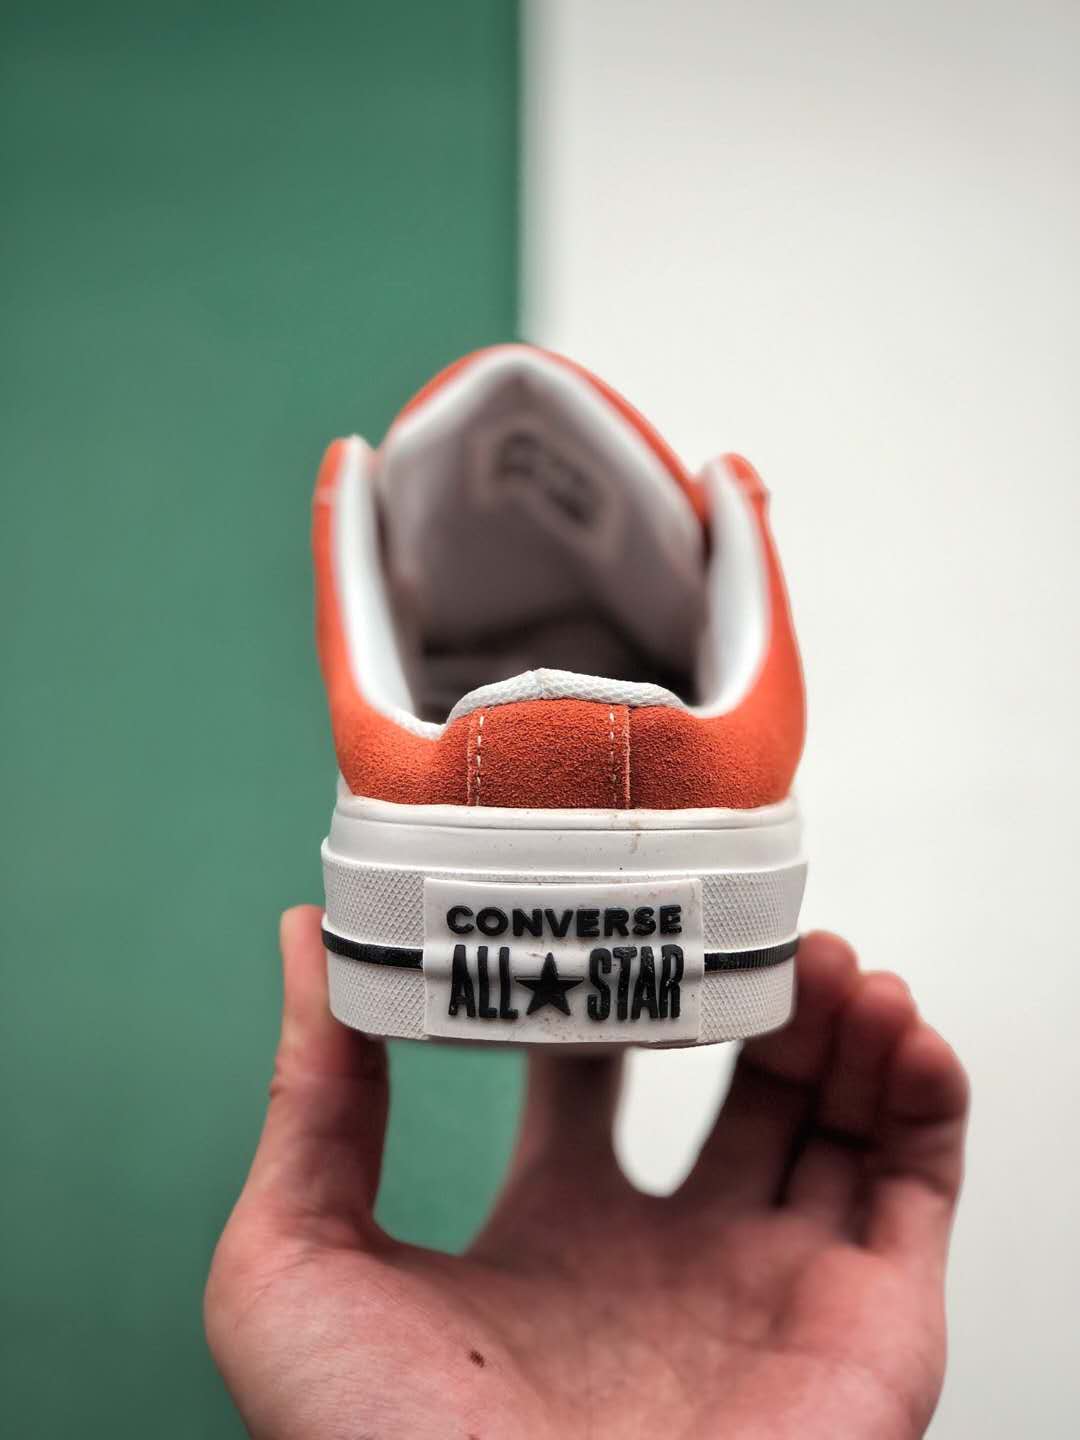 Converse One Star Mule 'Black' 162066C - Stylish Slip-On Sneakers.